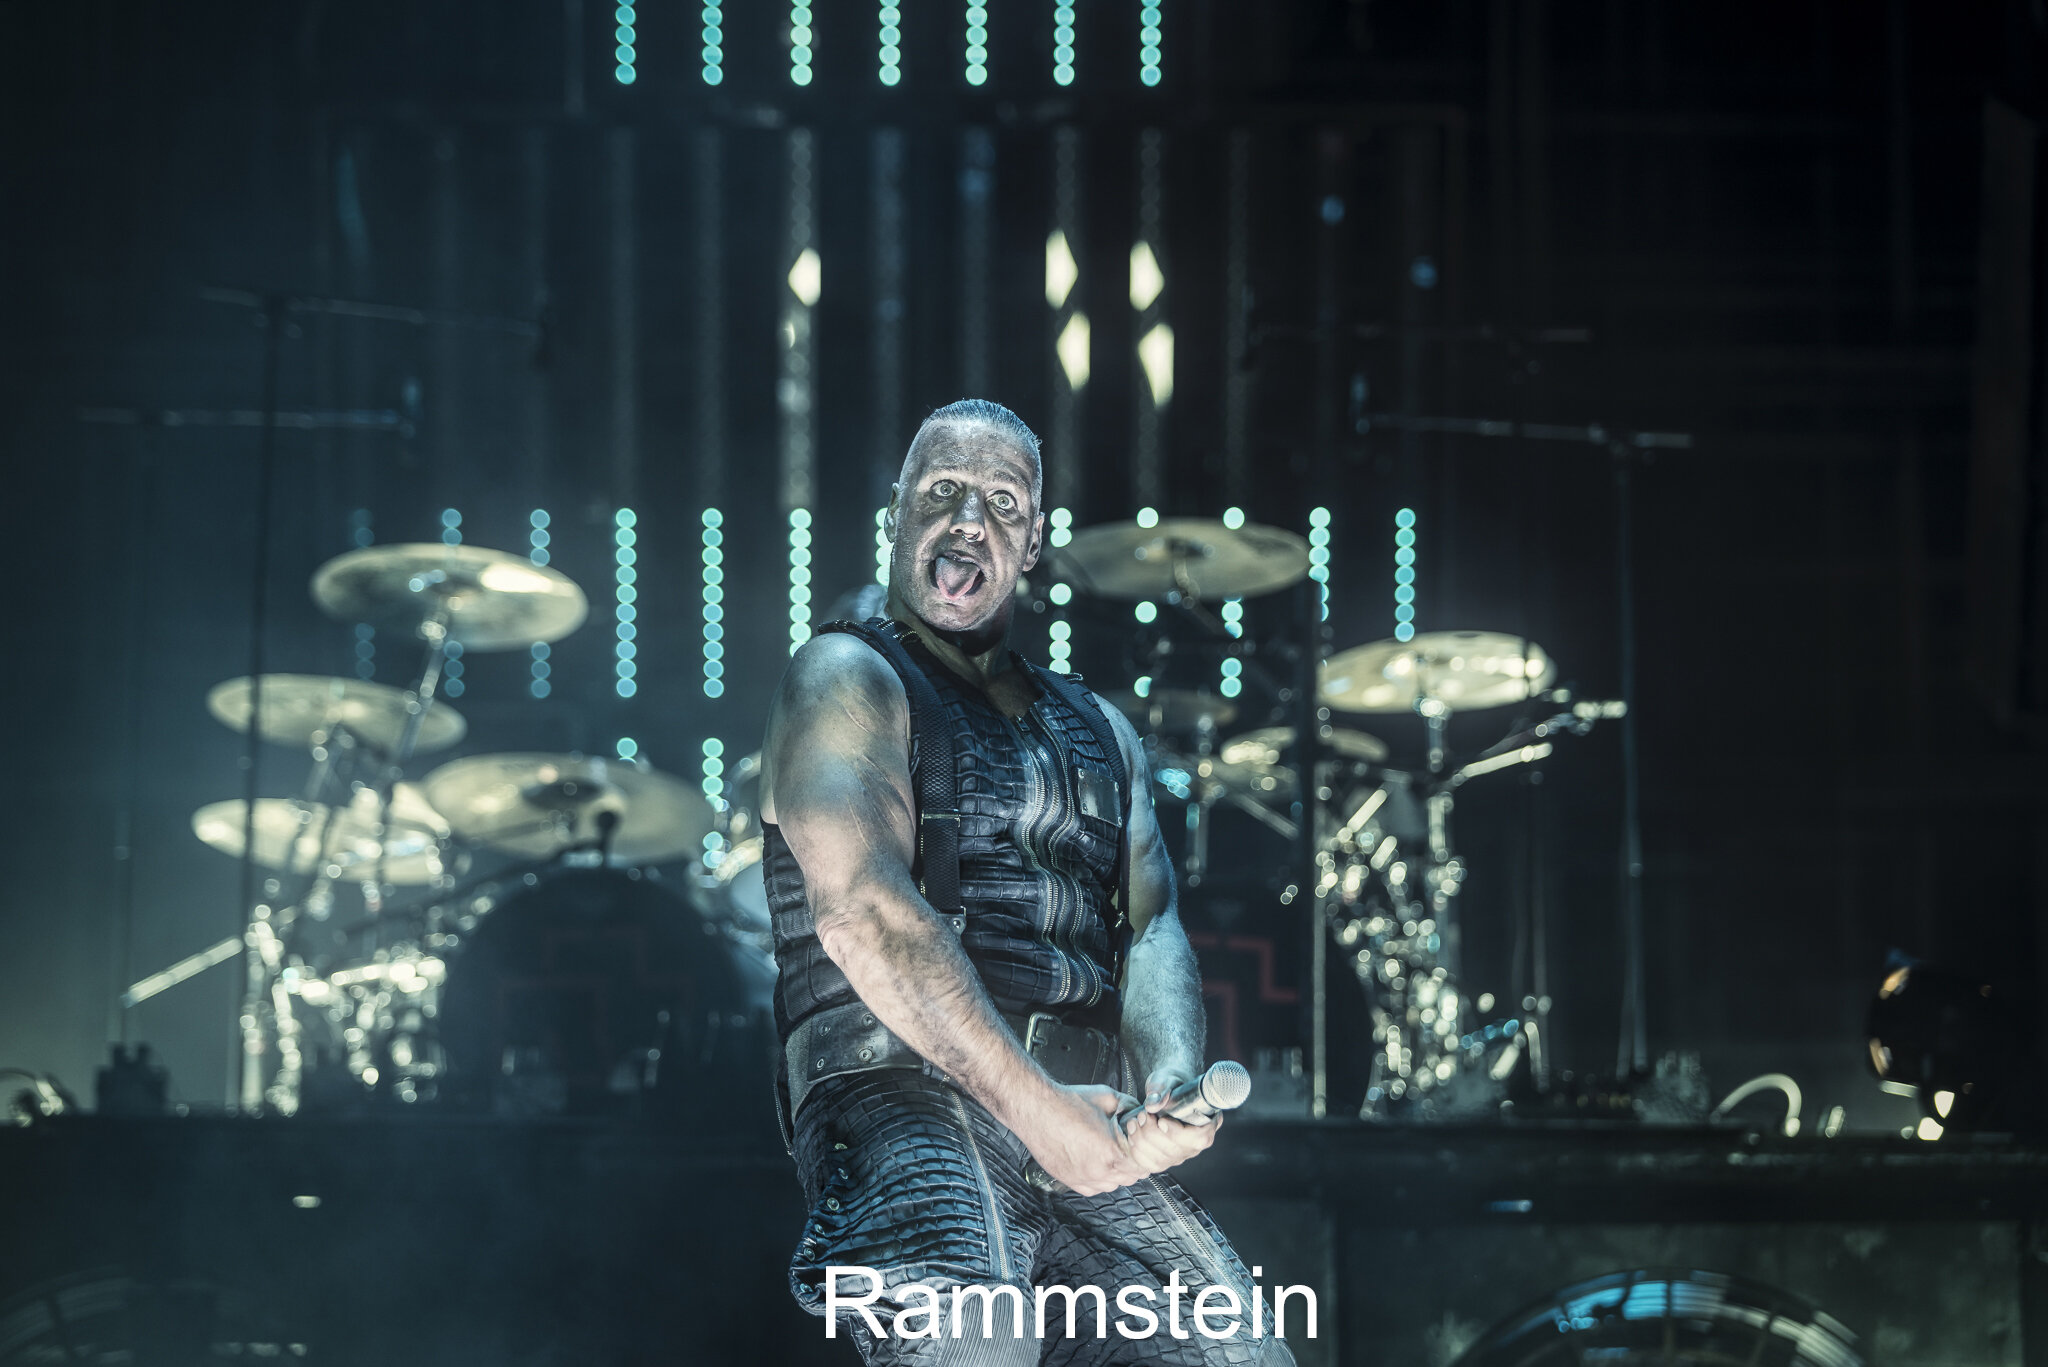 Рамштайн песня радио. Группа рамштайн 2022. Группа Rammstein 2020. Rammstein Live 2021. Кристоф рамштайн 2022.